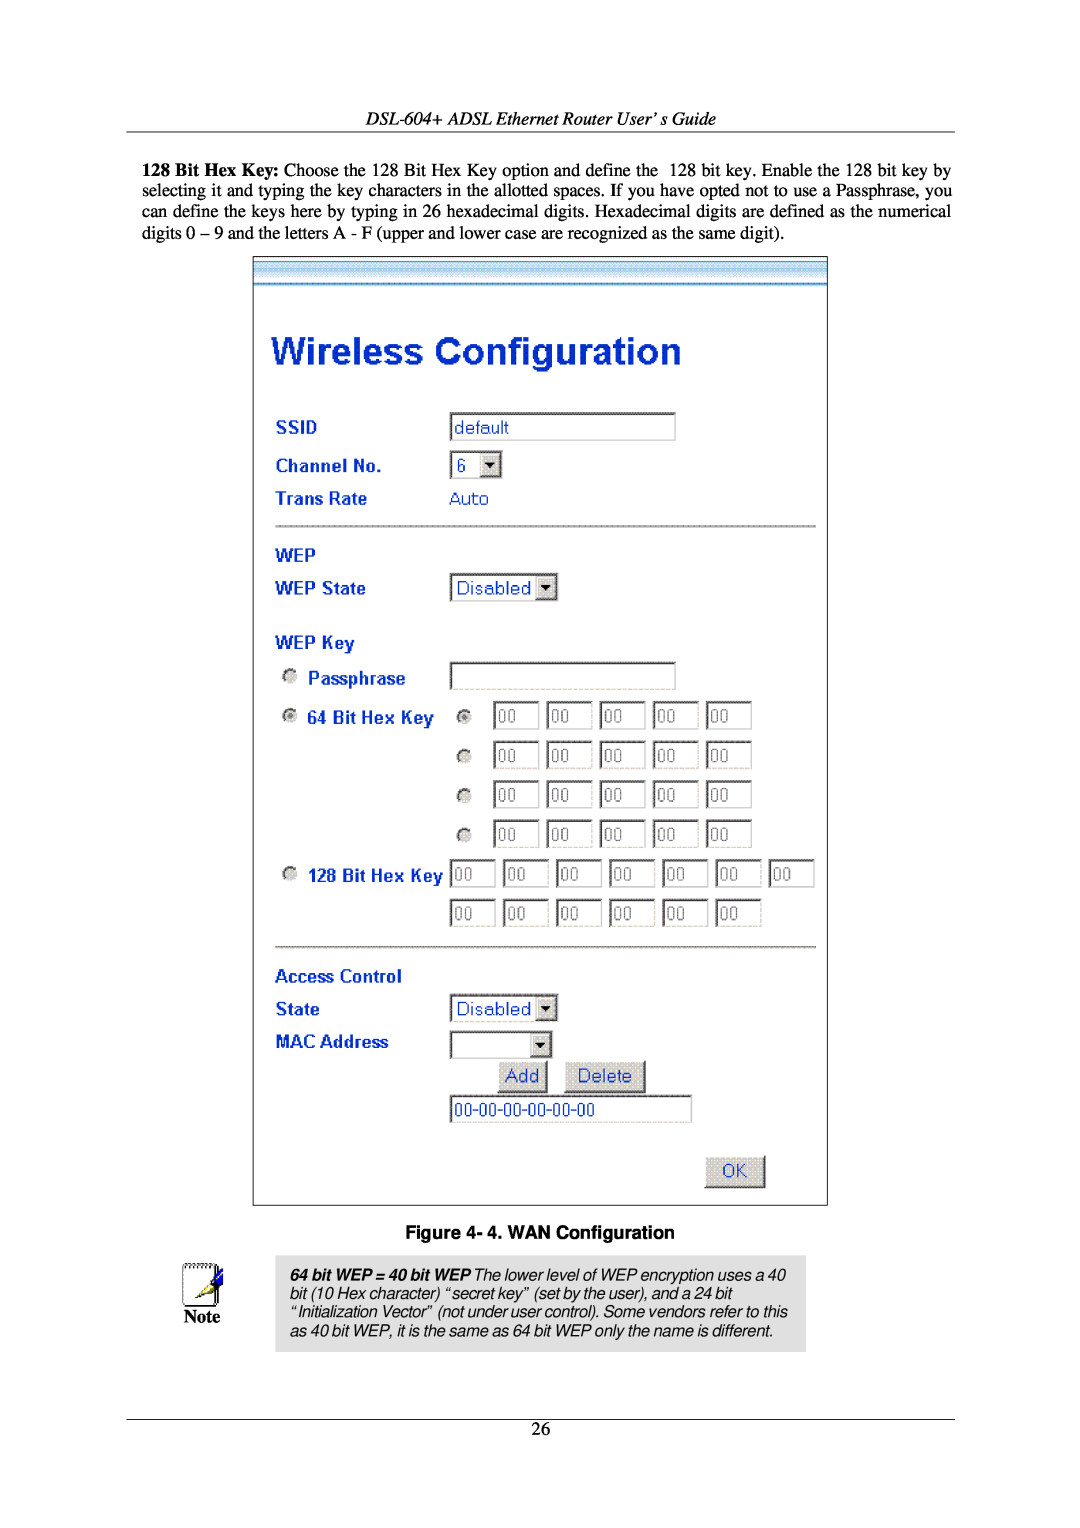 D-Link manual DSL-604+ ADSL Ethernet Router User’s Guide, 4. WAN Configuration 